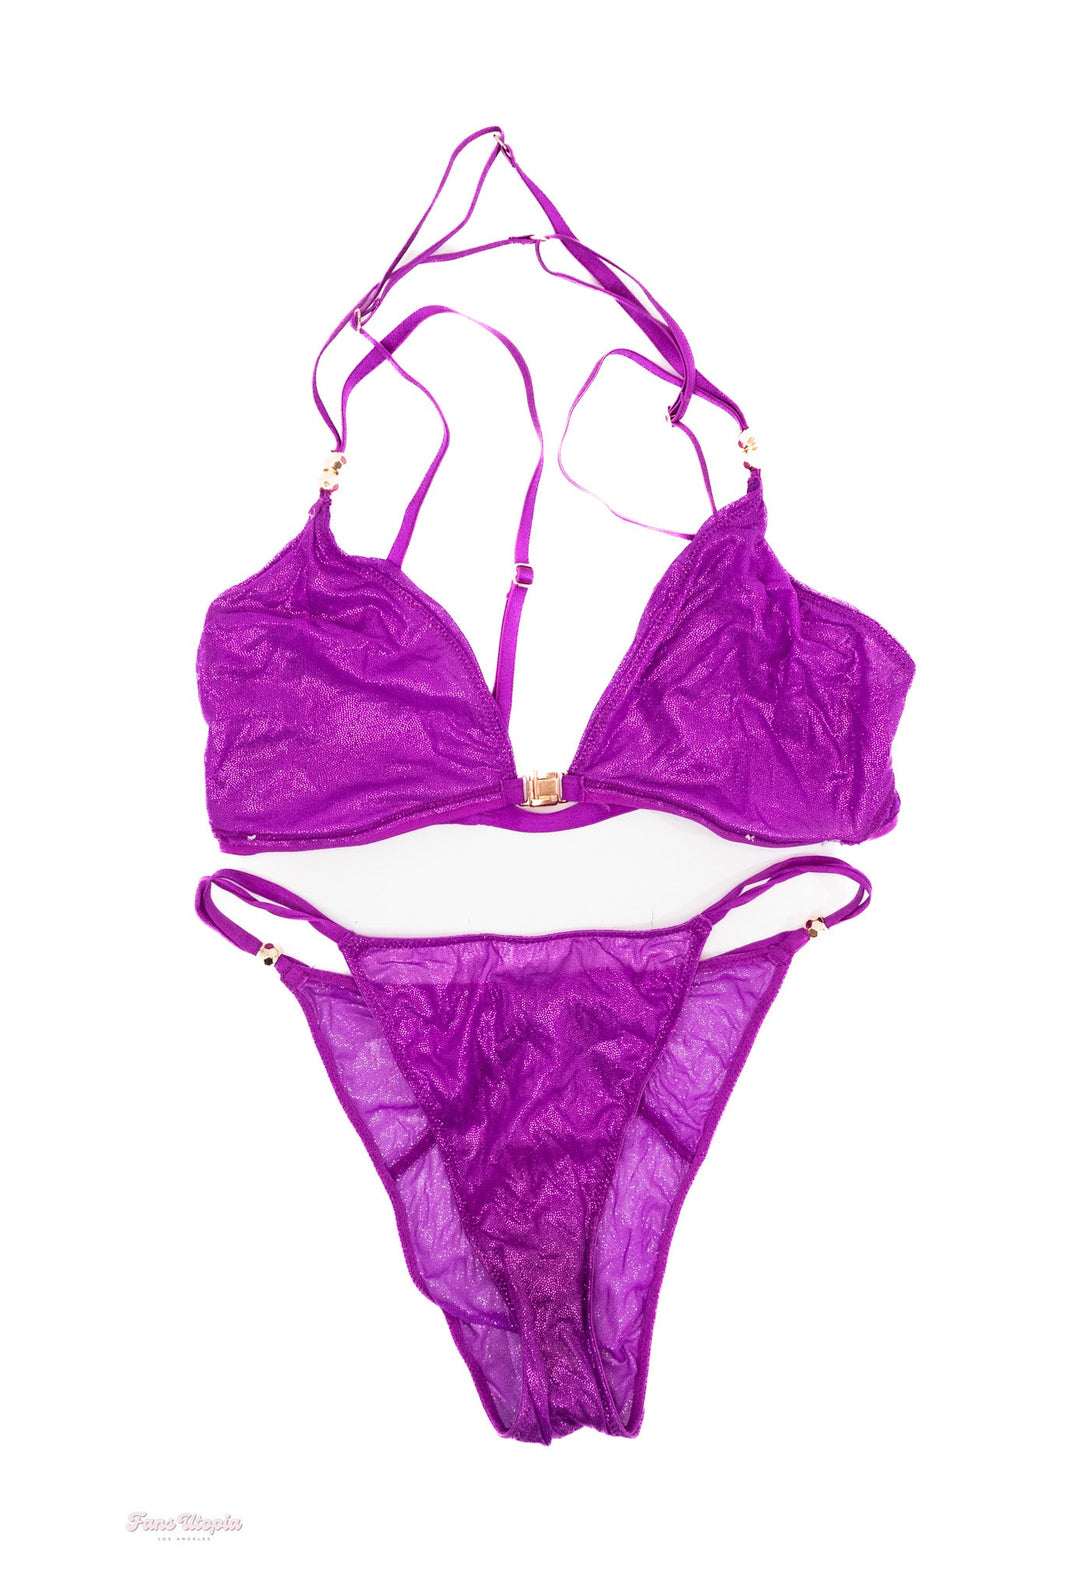 Siri Dahl Sparkling Purple Bikini